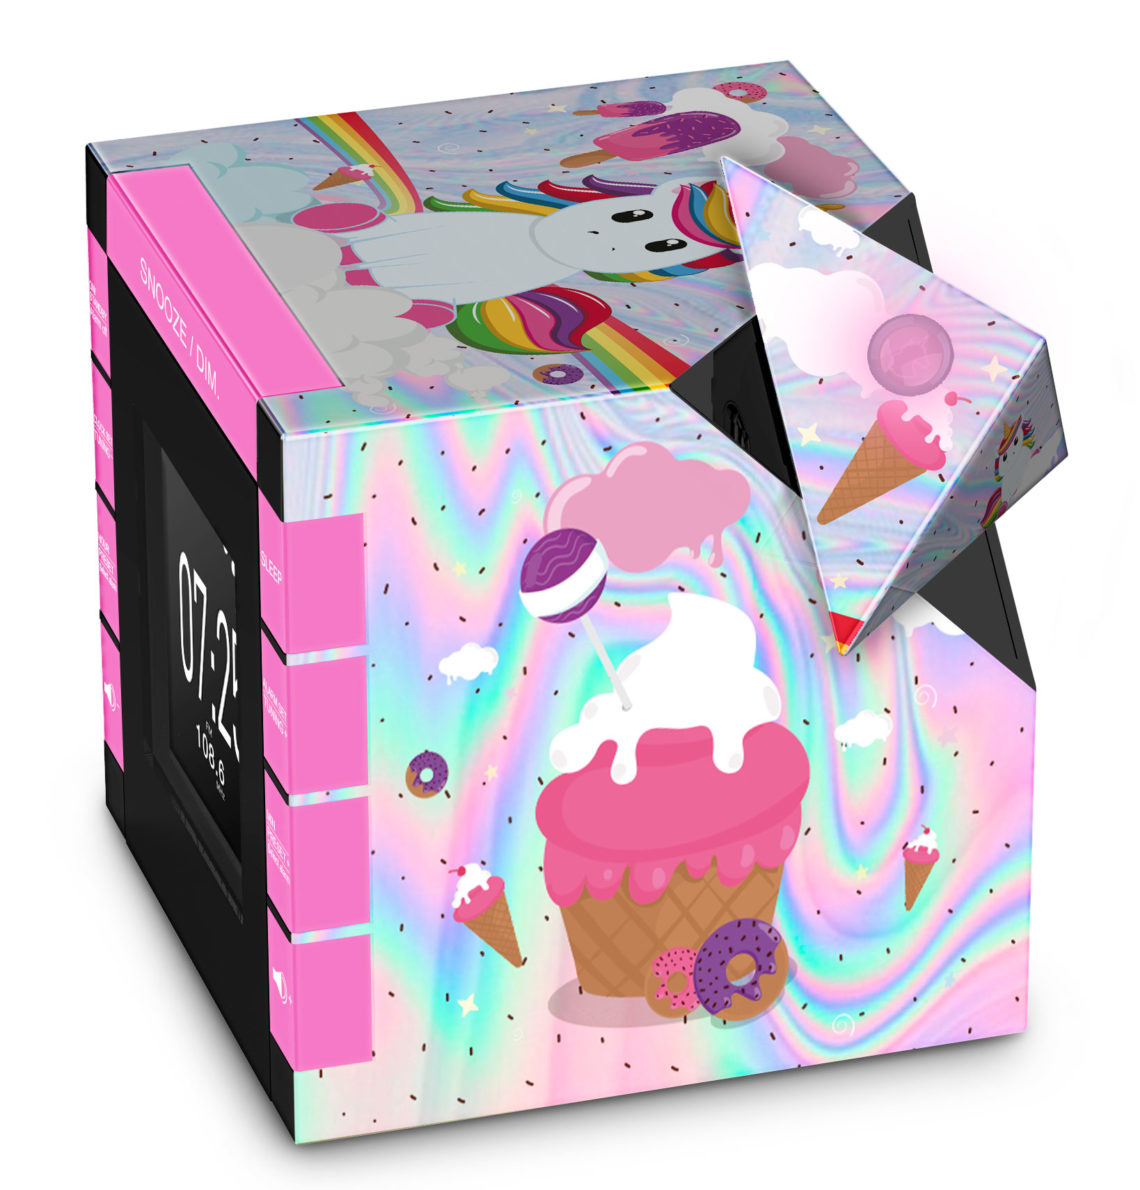 Radio-Réveil « Happy Cube » RR70PDOGS2 BIGBEN, Bigben - Le Design Sonore  pour tous, Audio, Thomson, Bigben Party, Bigben kids, Lumin'US, Colorlight